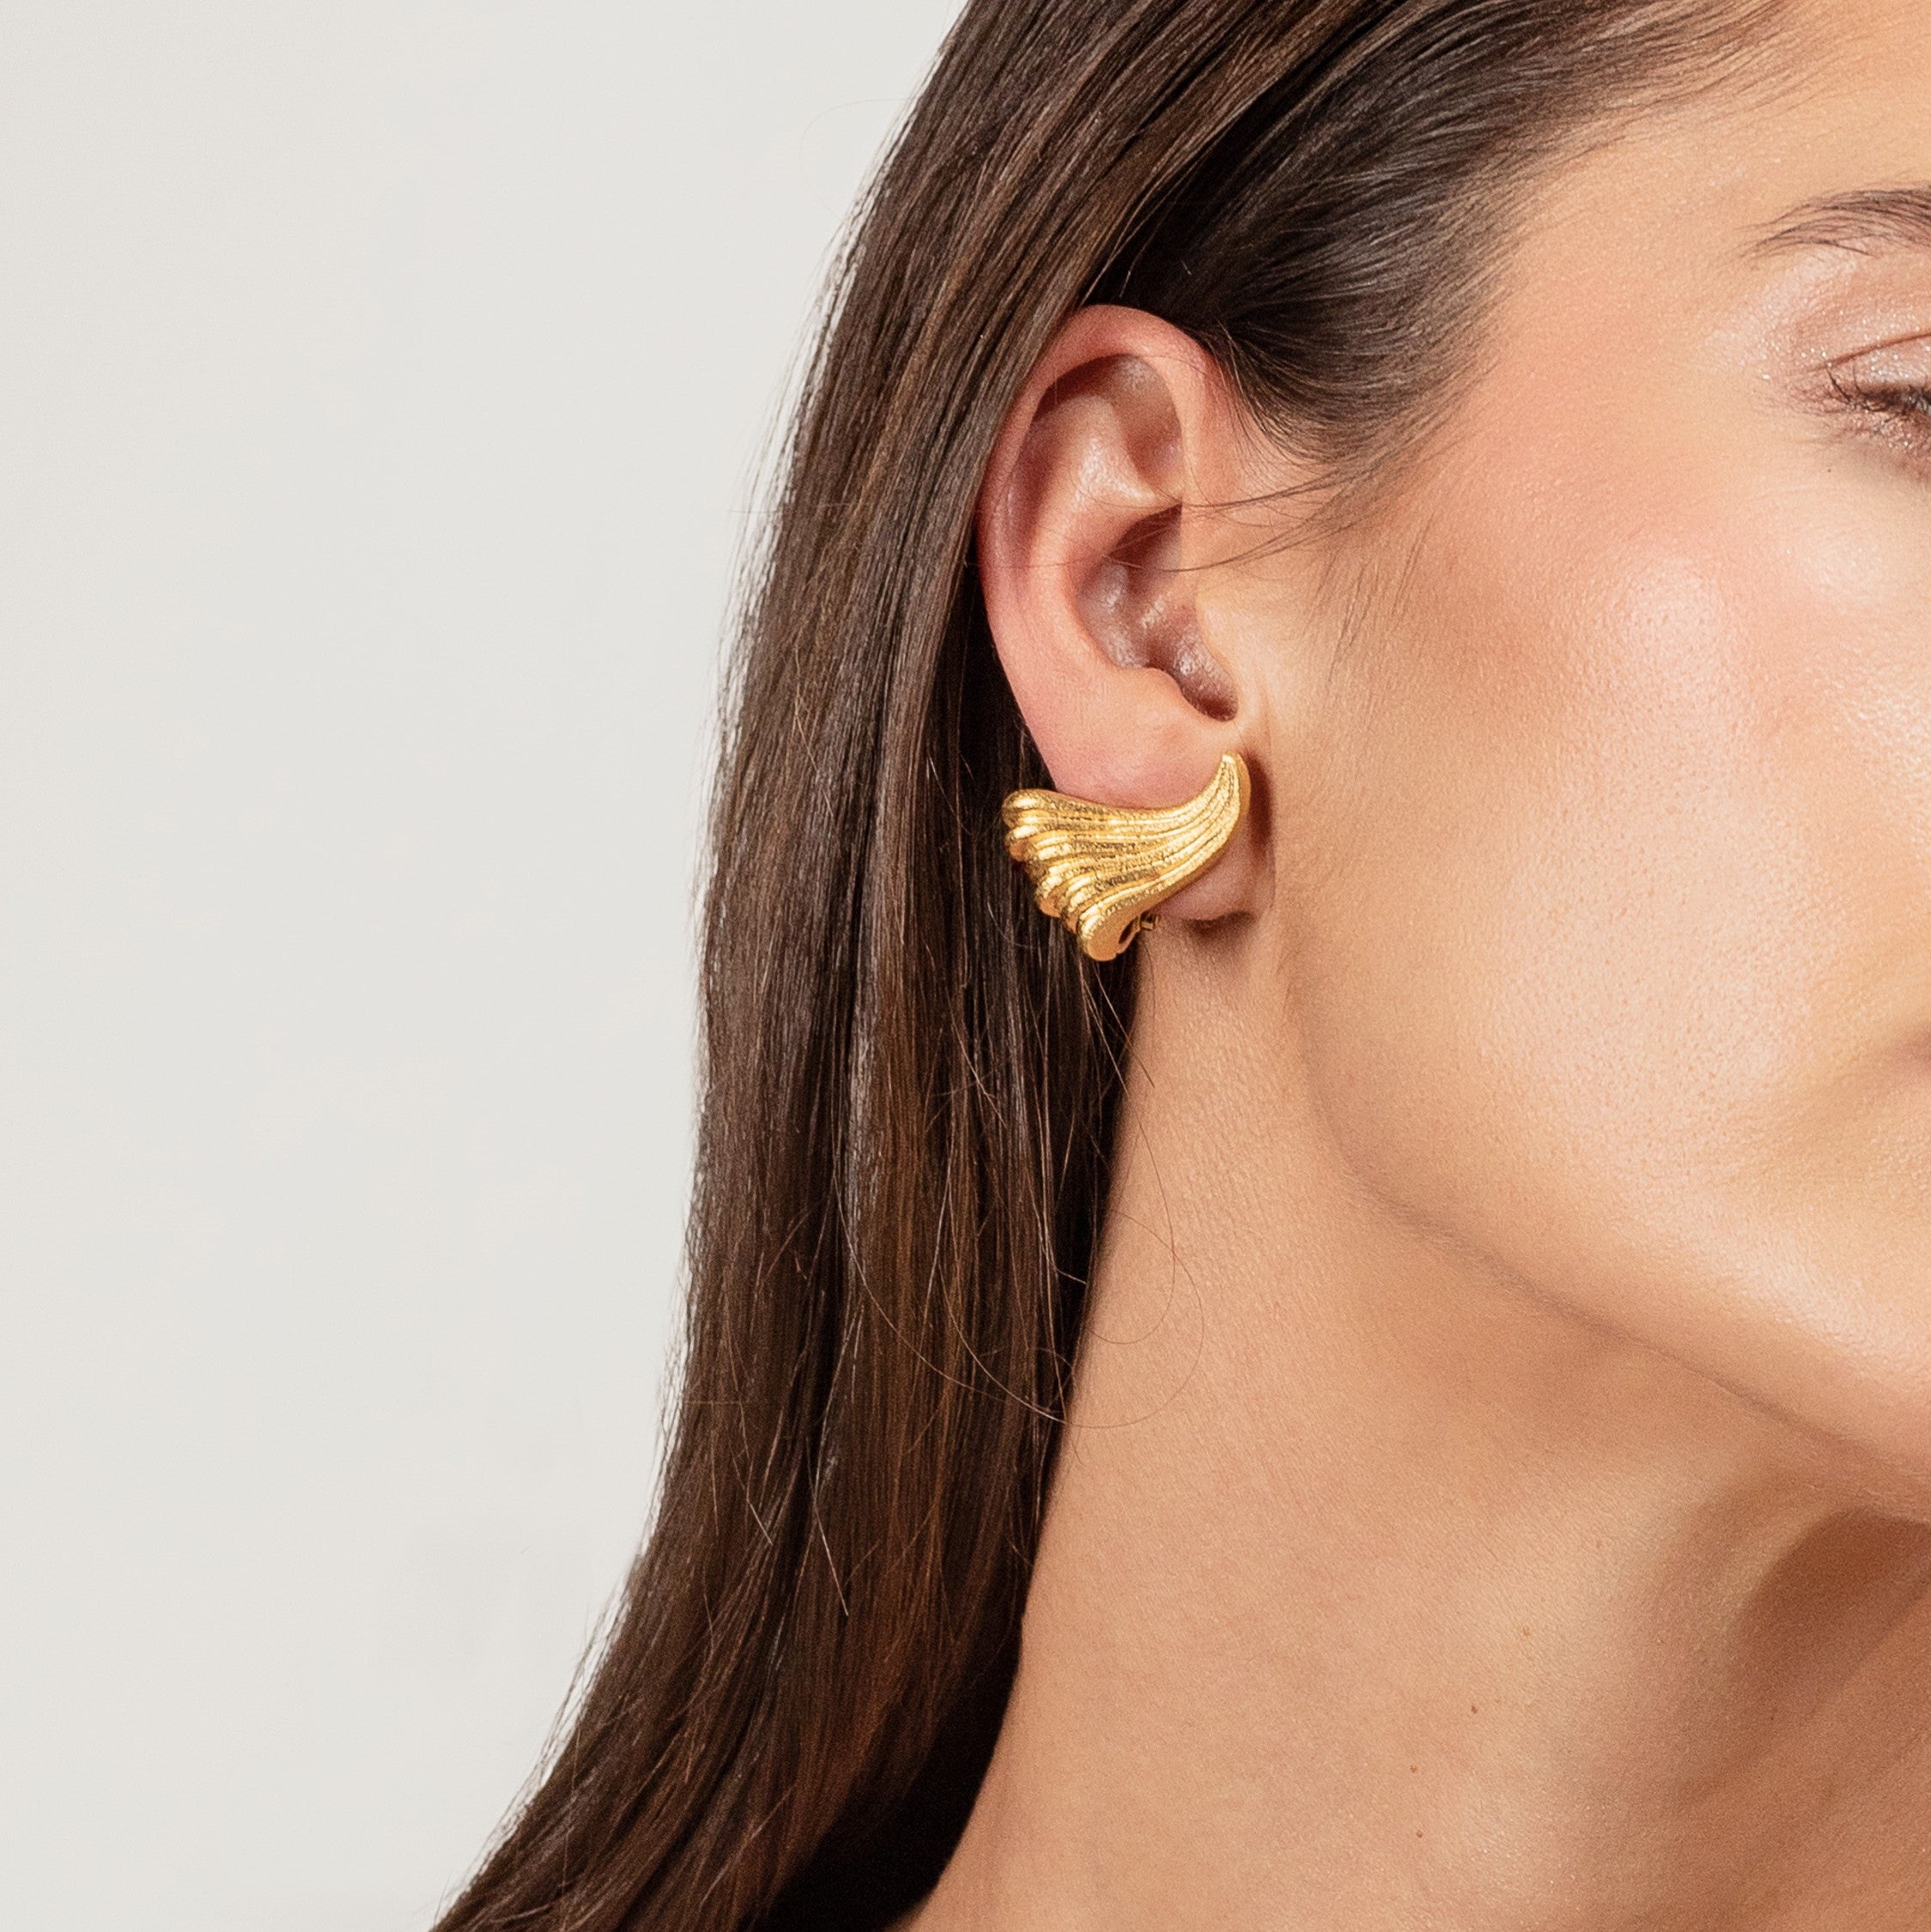  Vintage 18ct gold wave earrings worn on a woman’s ear.